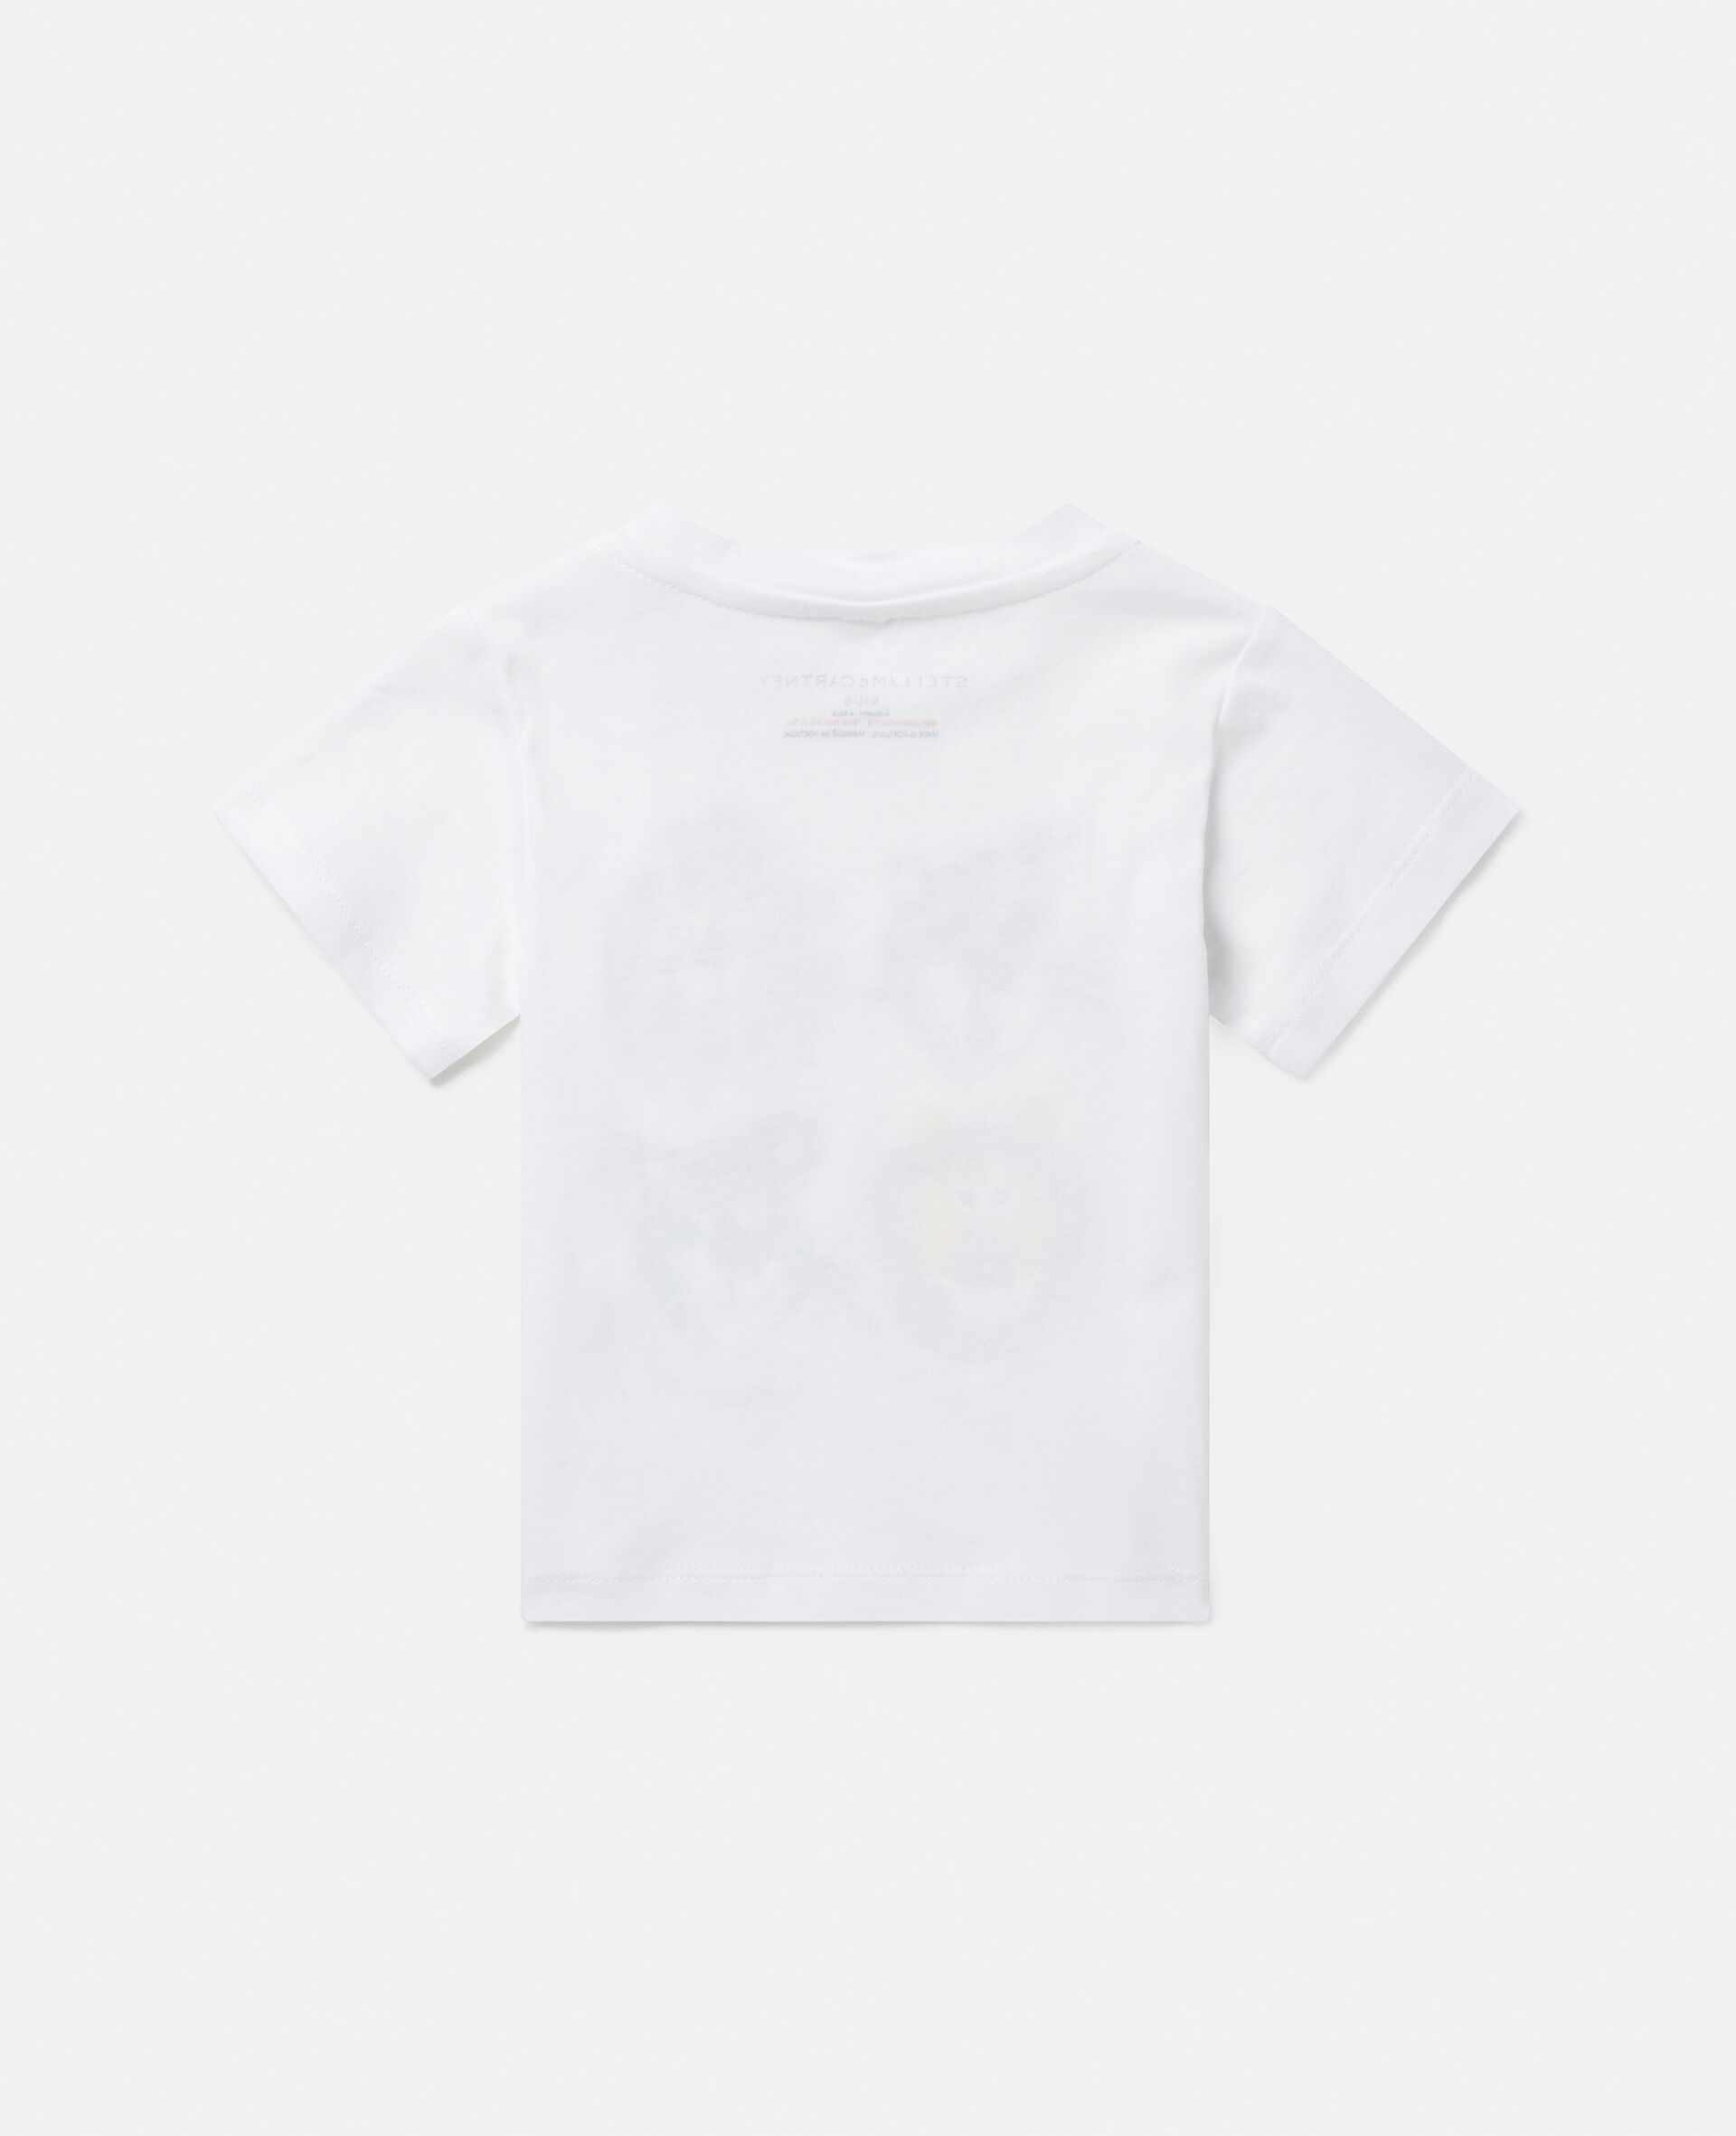 Lion Family Print T-Shirt-White-large image number 2